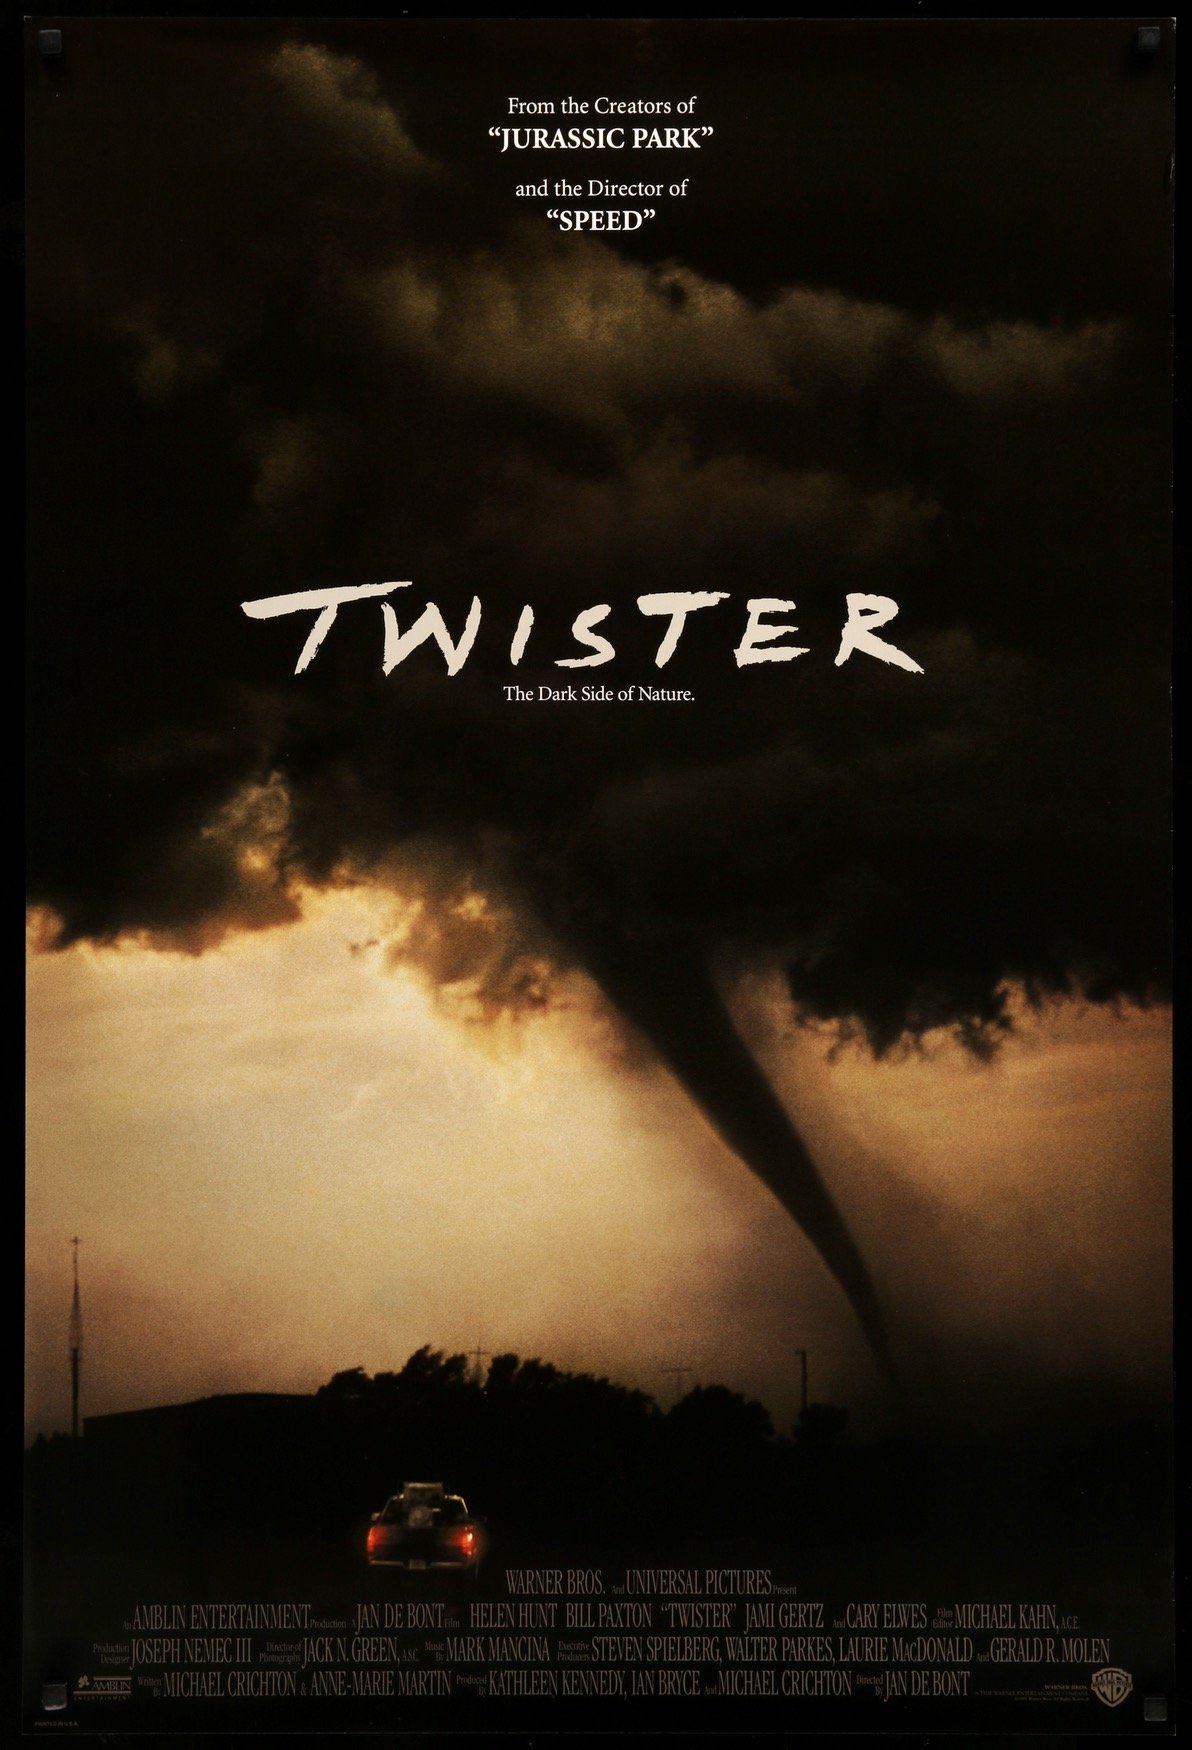 Twister (1996) ★★★☆☆